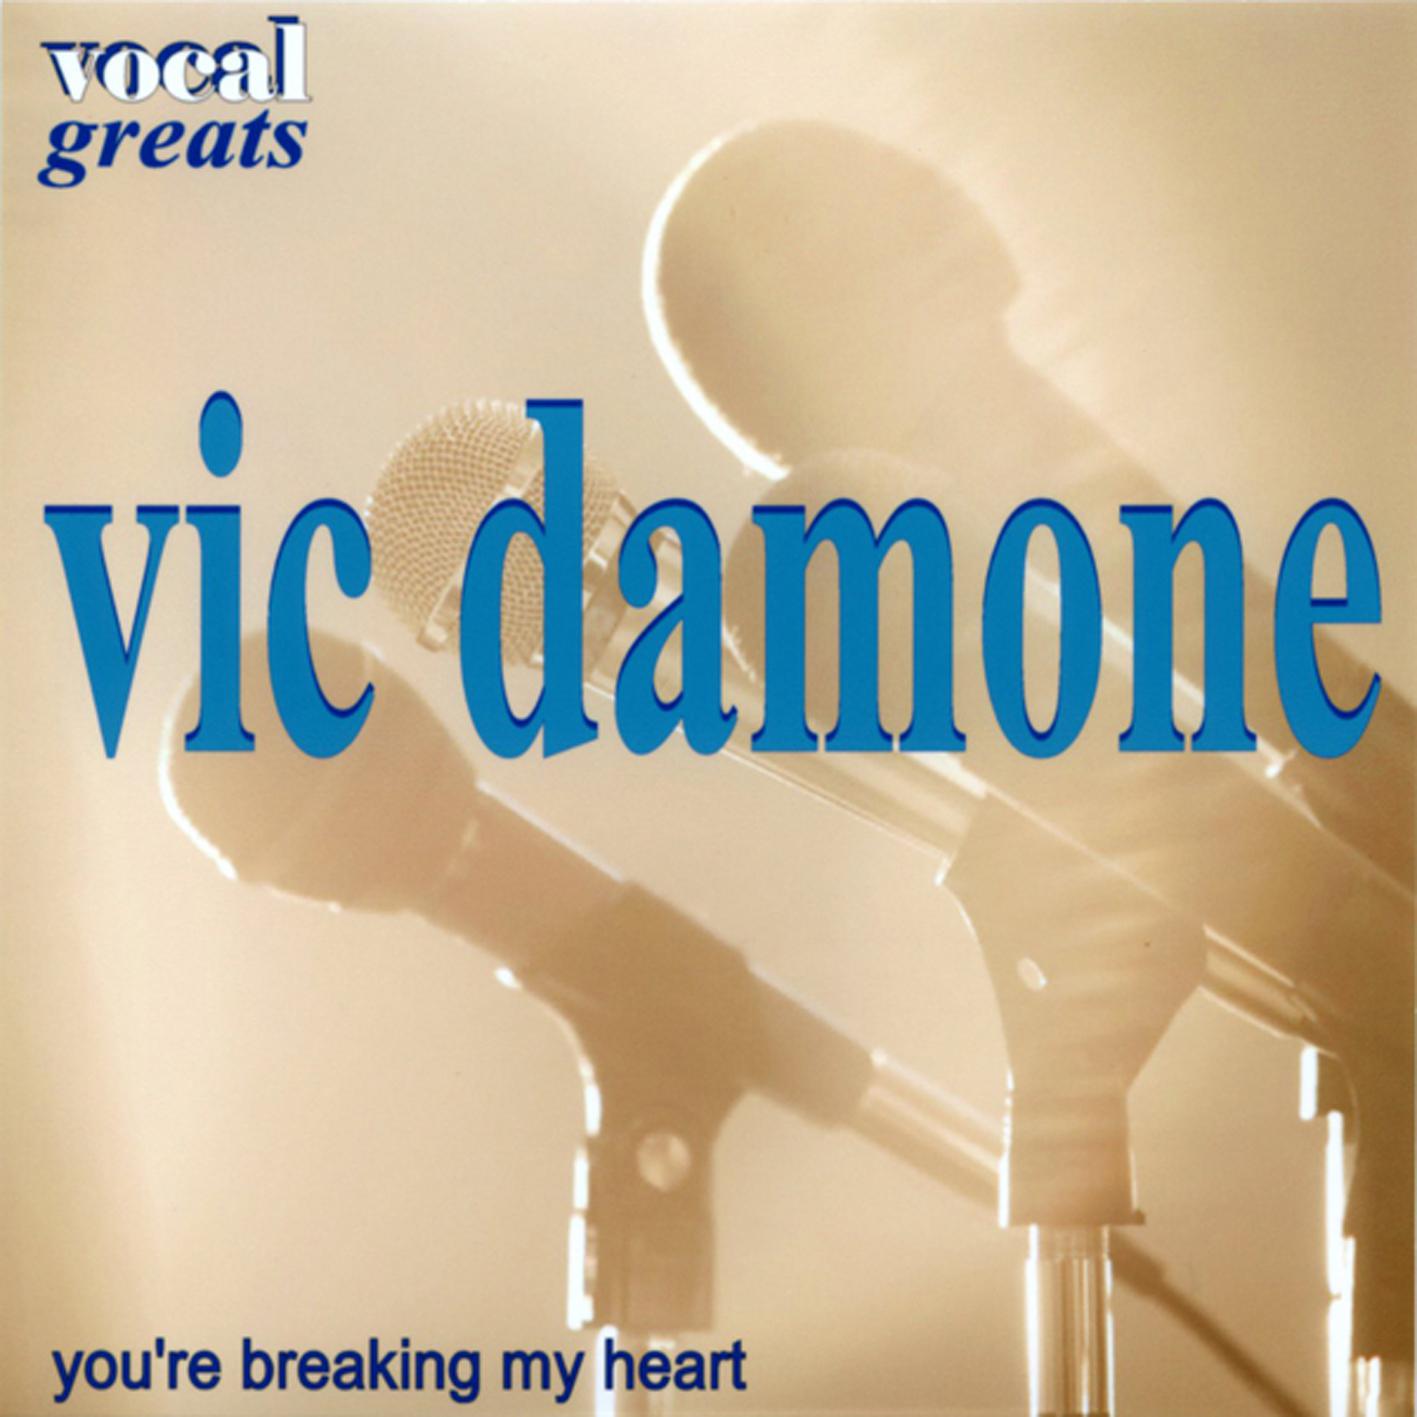 Vocal Greats - Vic Damone